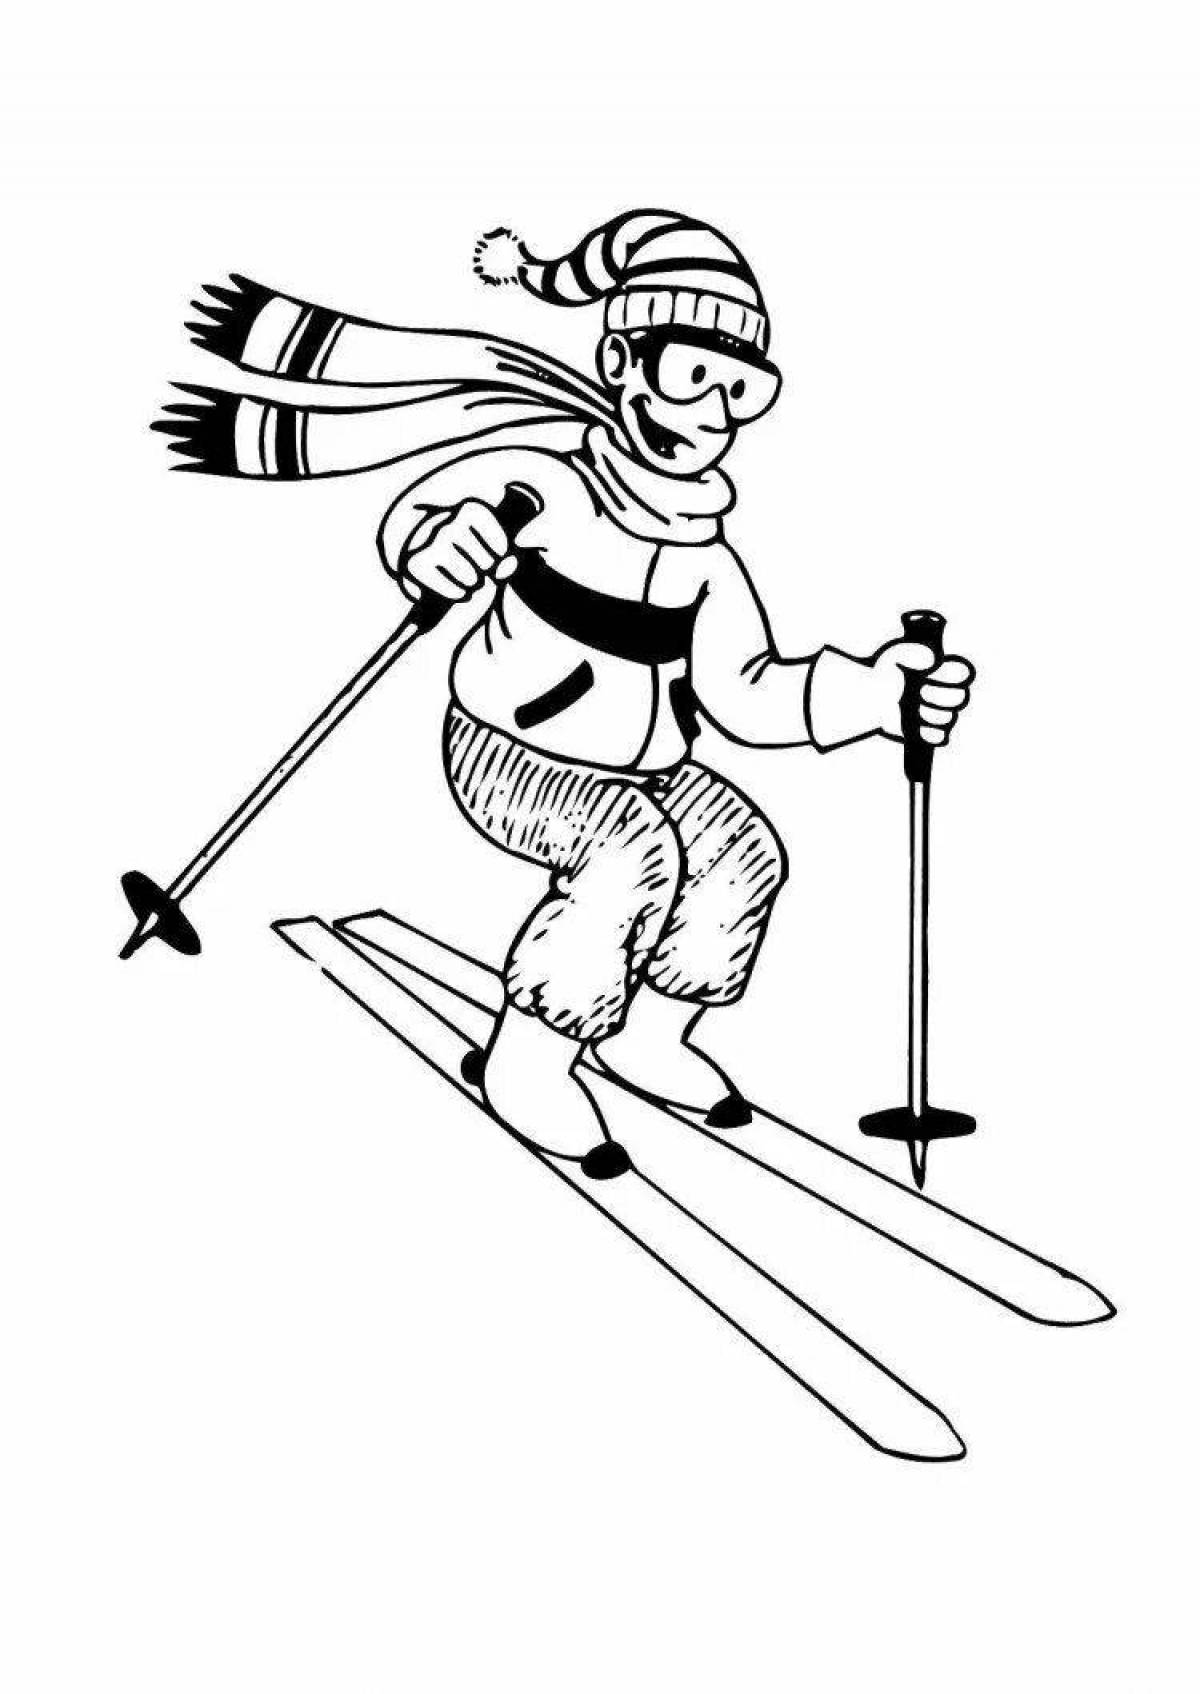 Balanced skier in motion